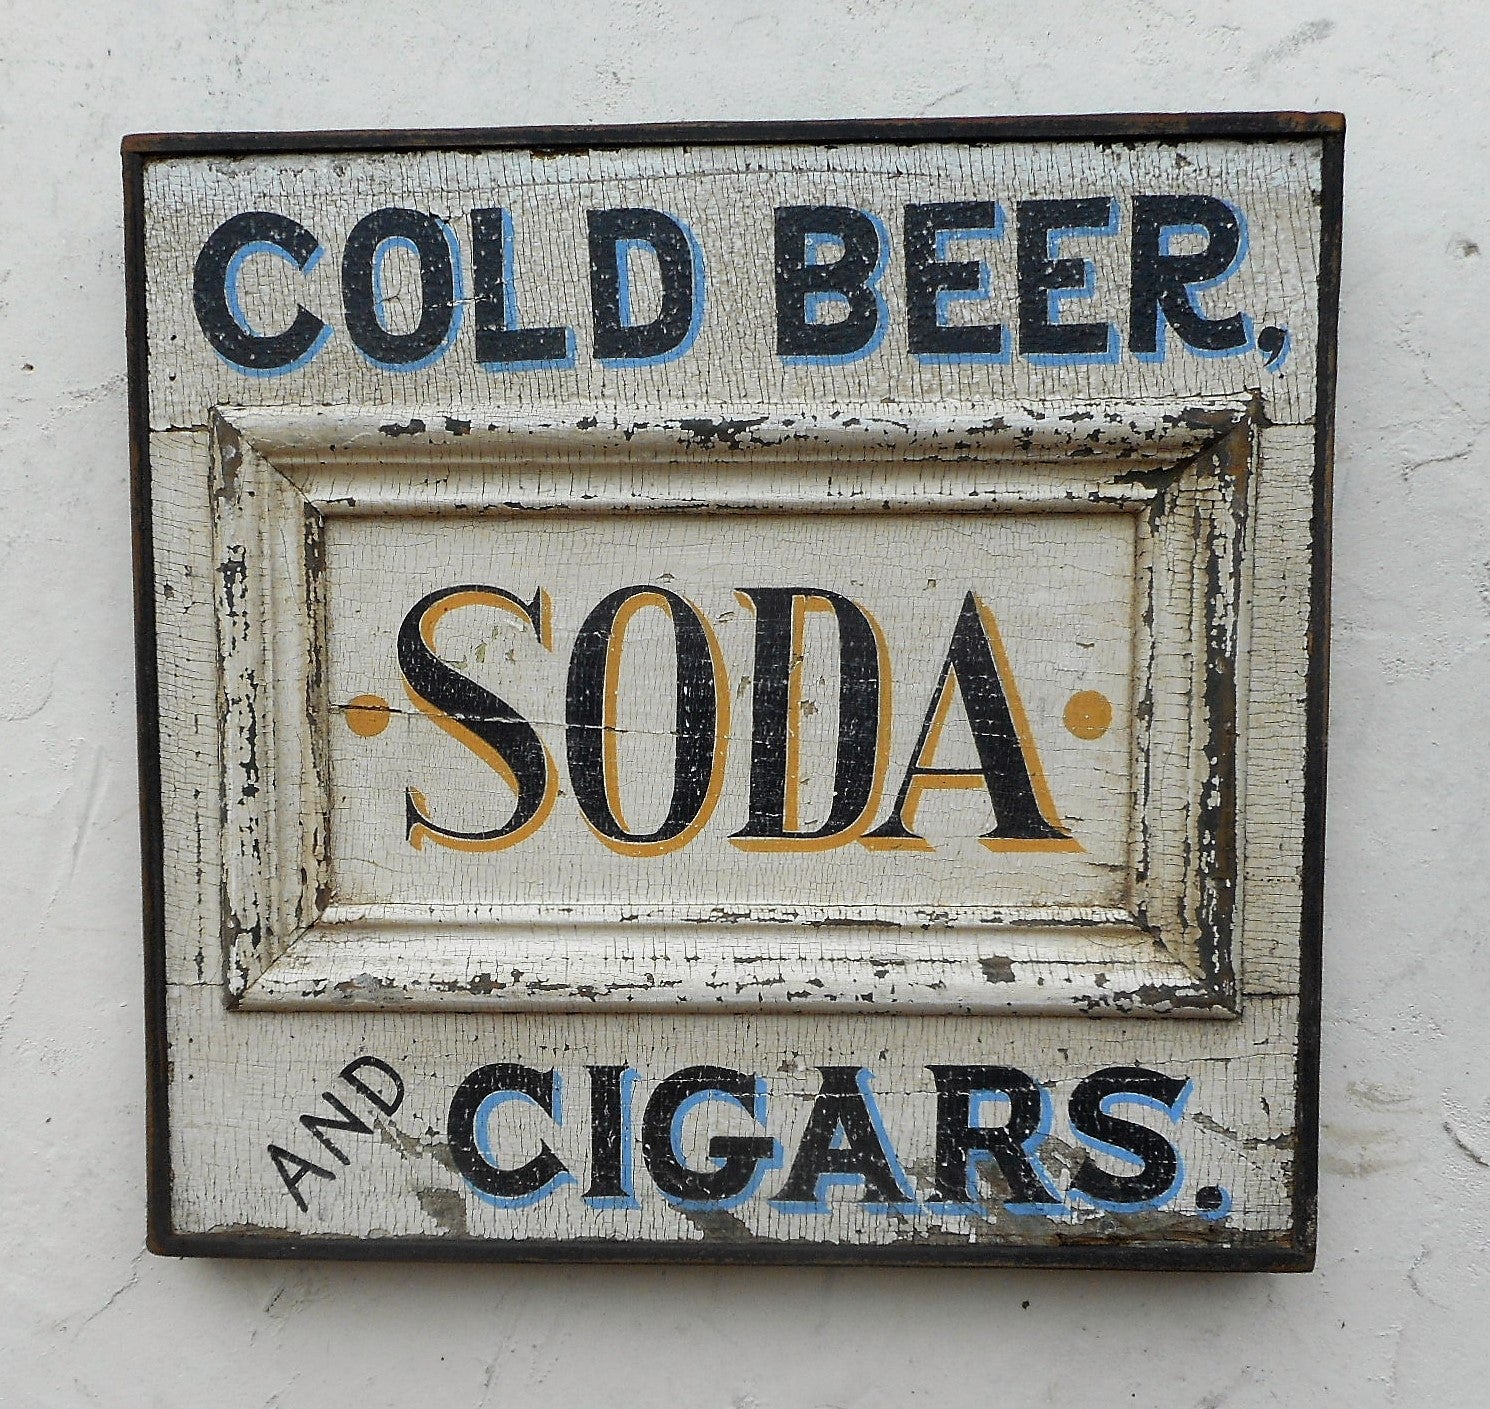 Cold Beer- Soda- Cigars